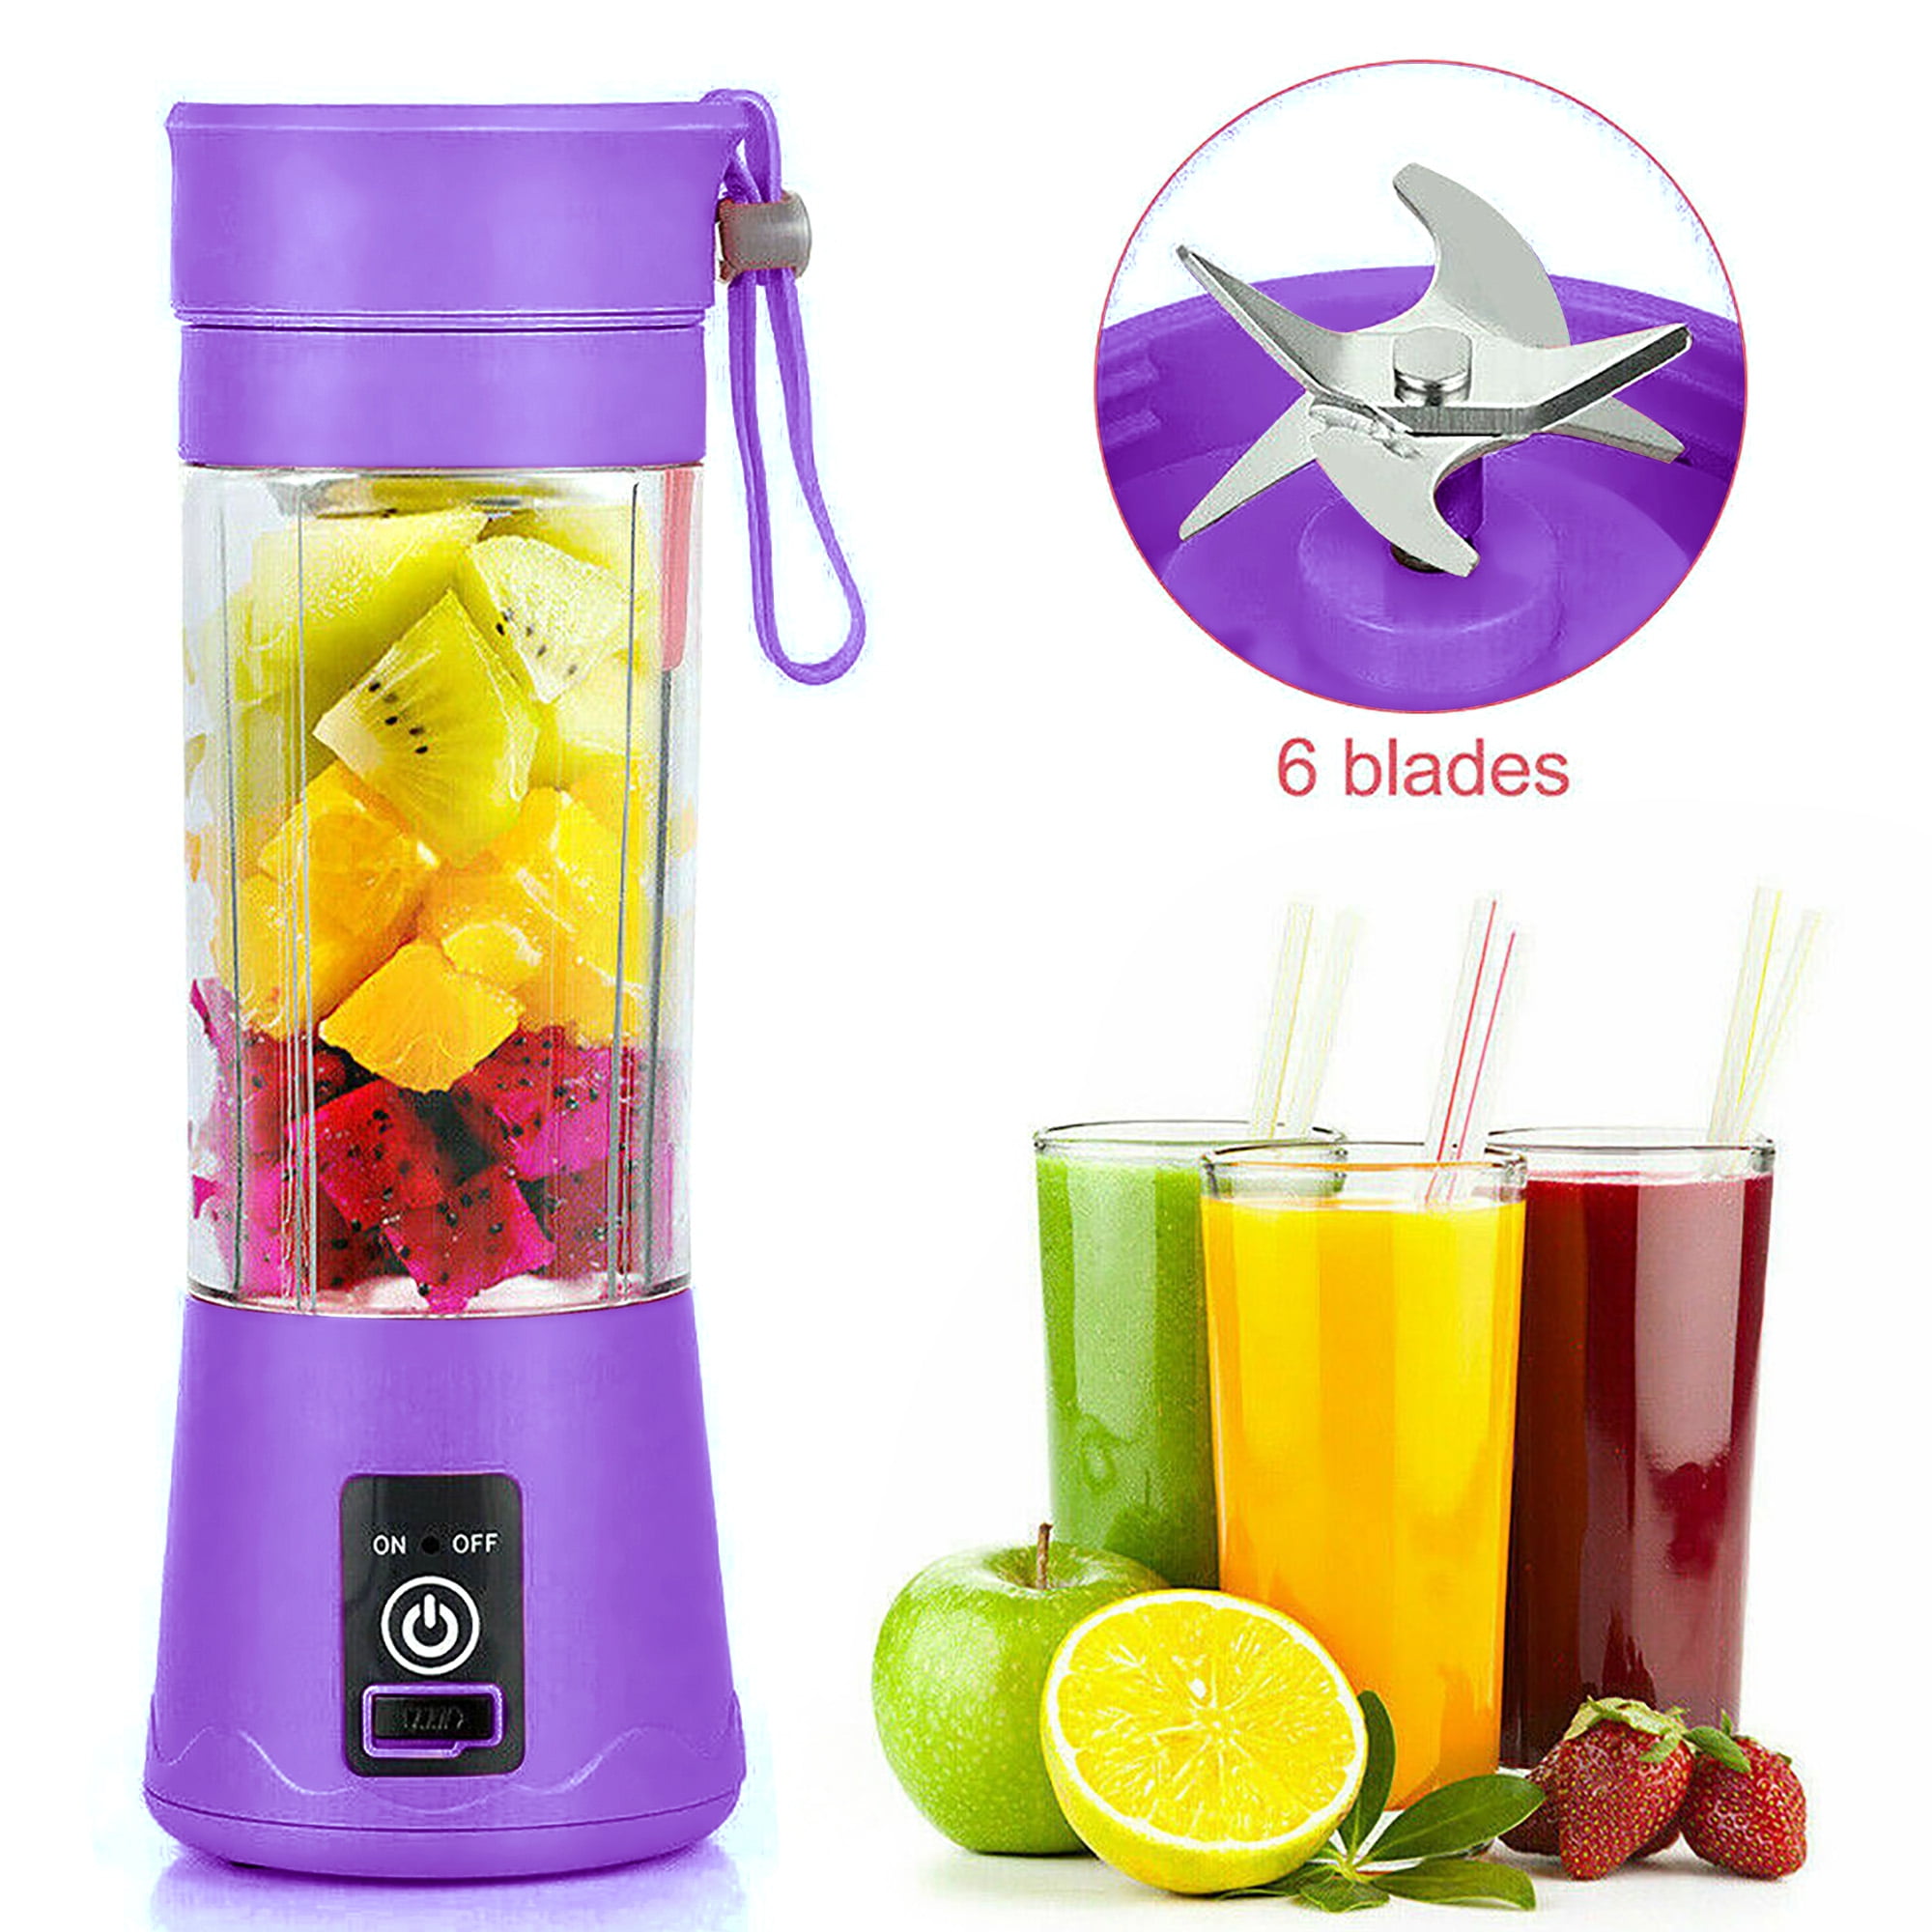  FEMUN,Juicer Machines,Juicer Blender,Fruit Juicer